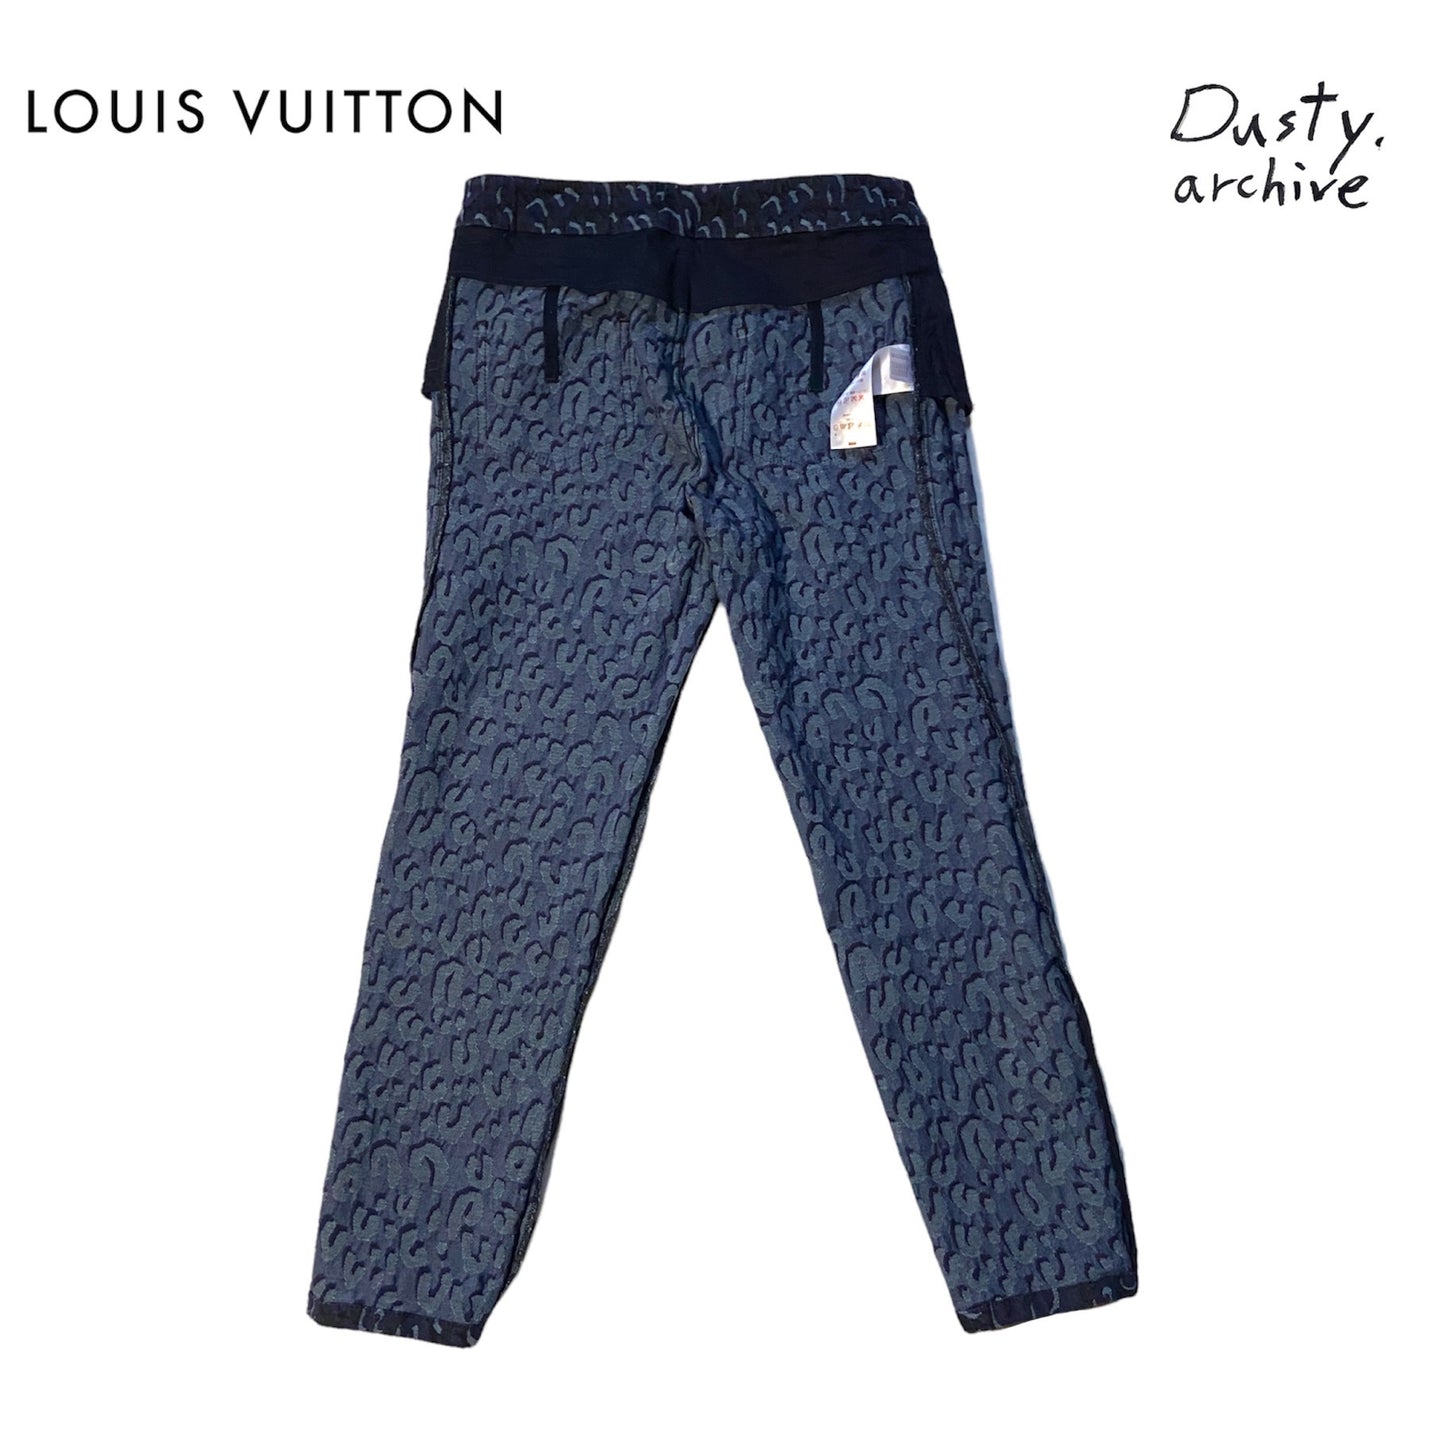 Louis vuitton stephen sprouse blue graffiti logo jeans 40